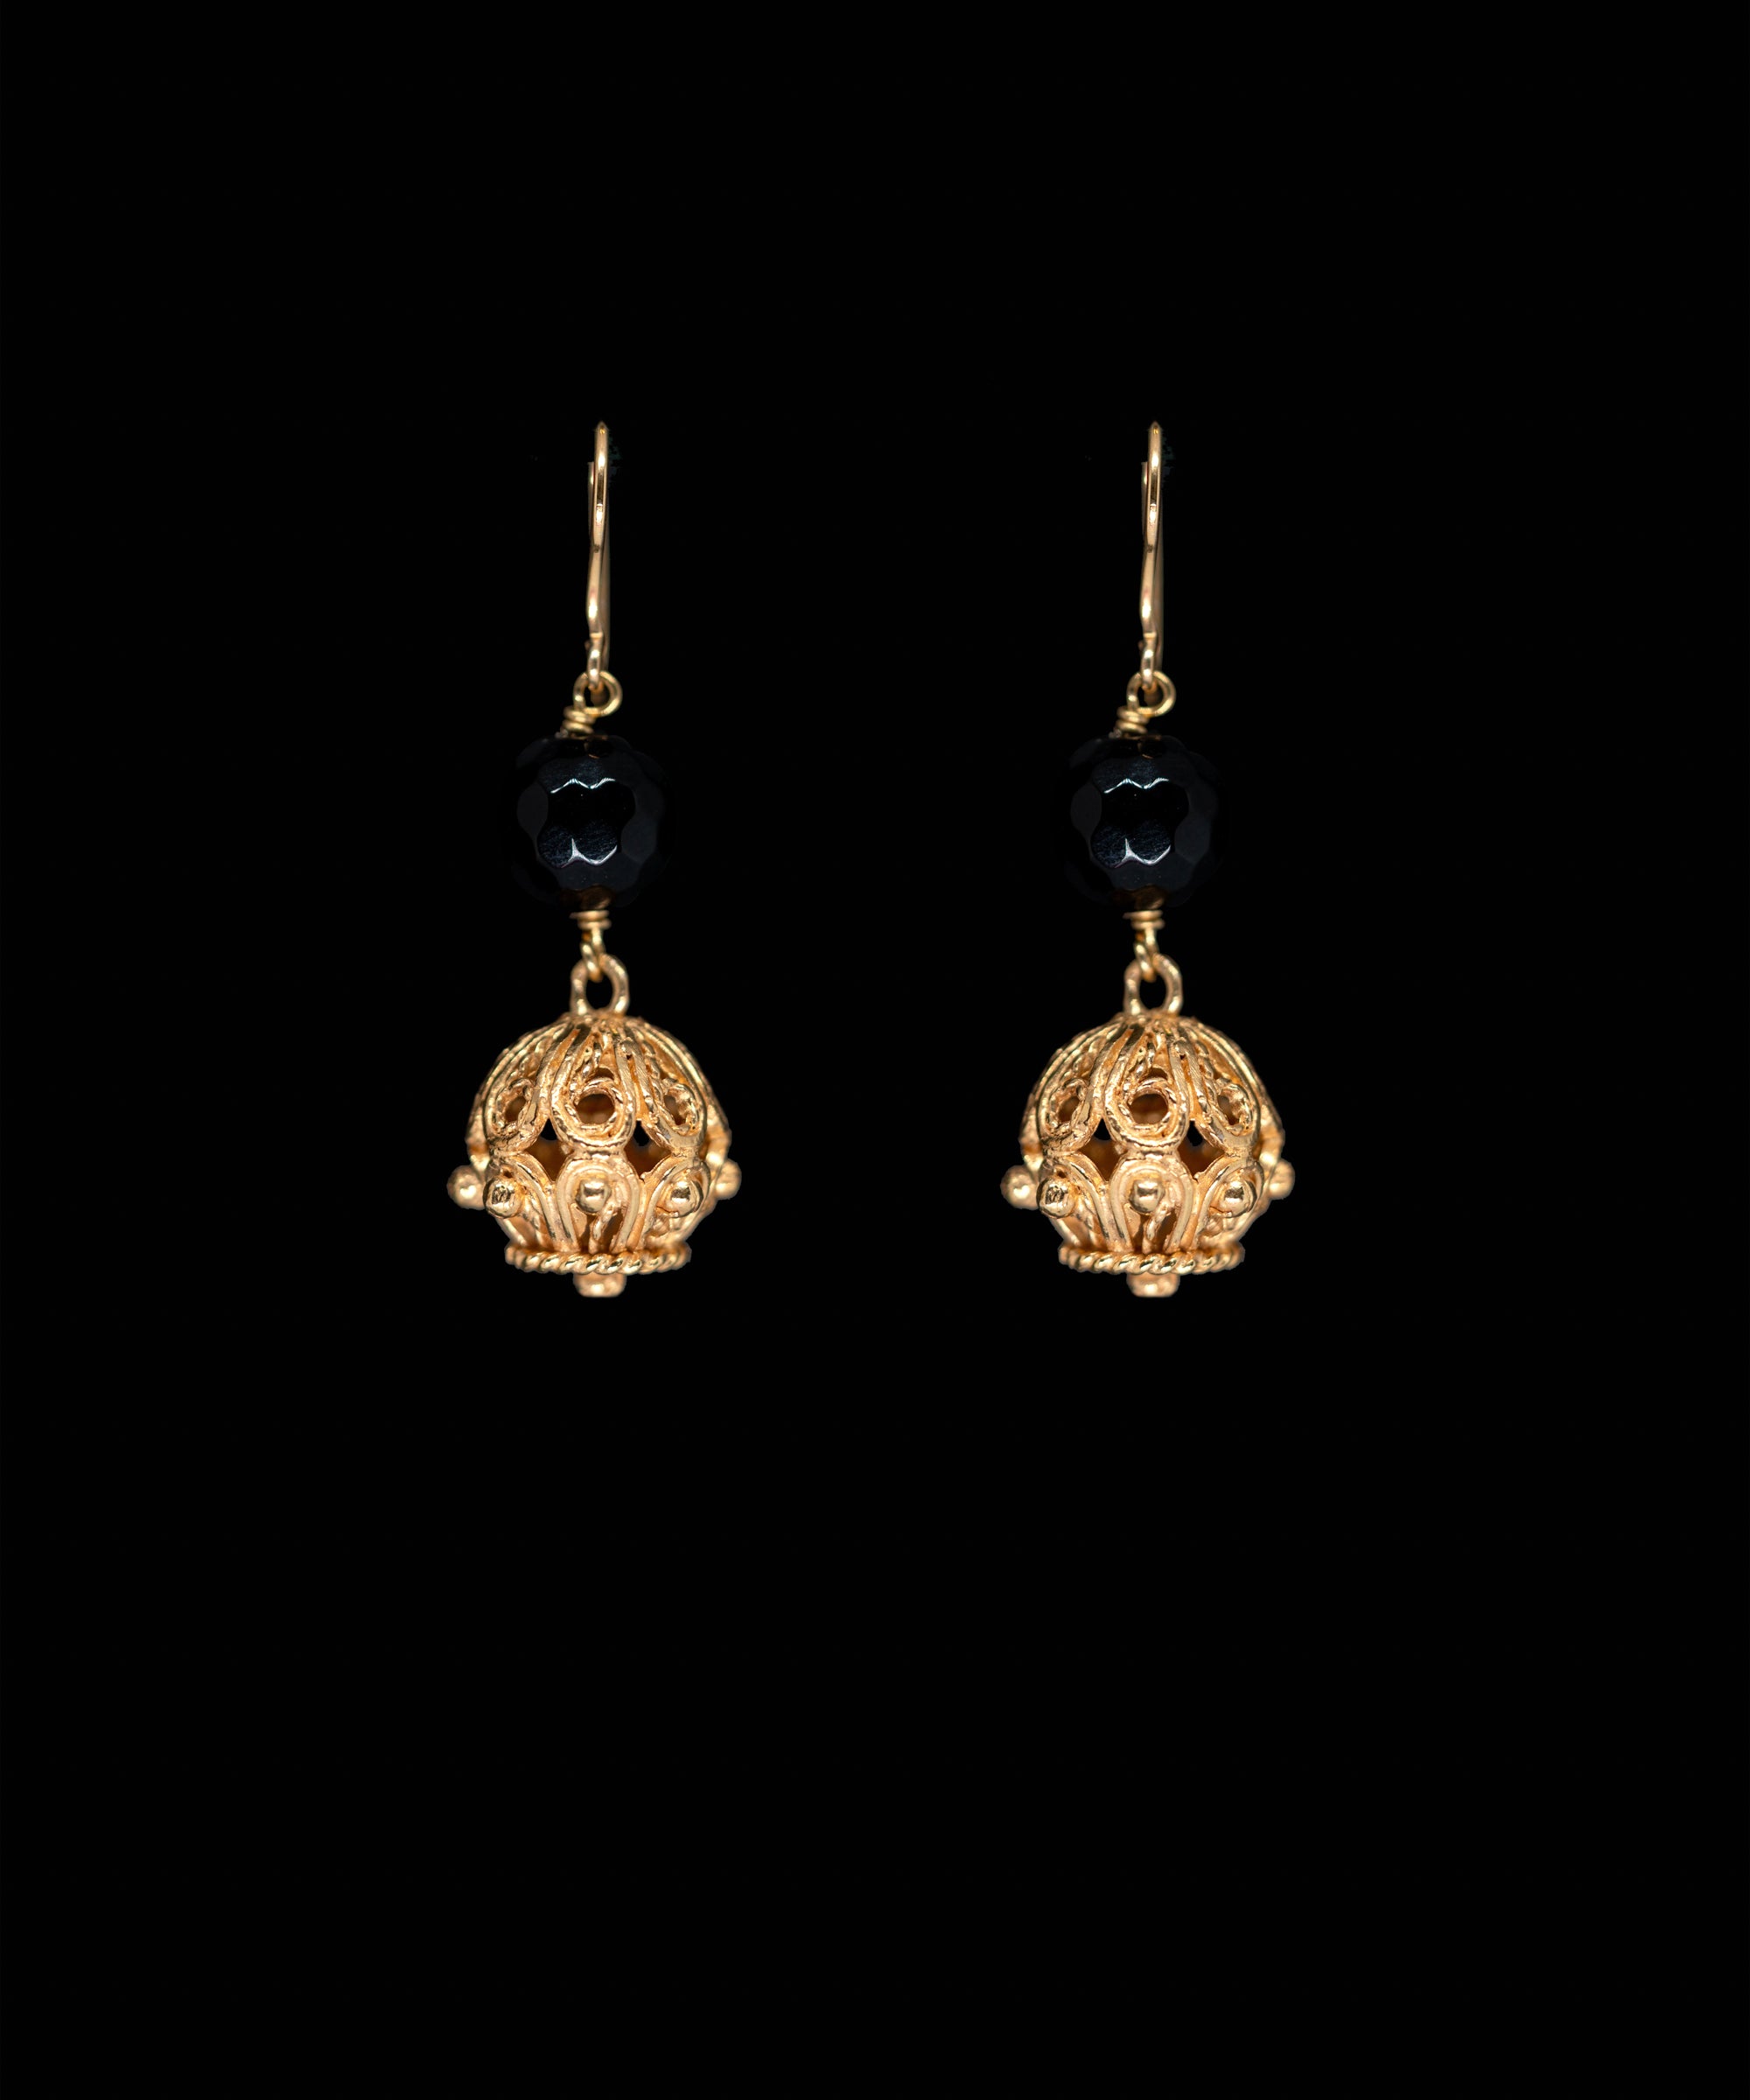 Jupetí Sphere Earrings with a gemstone